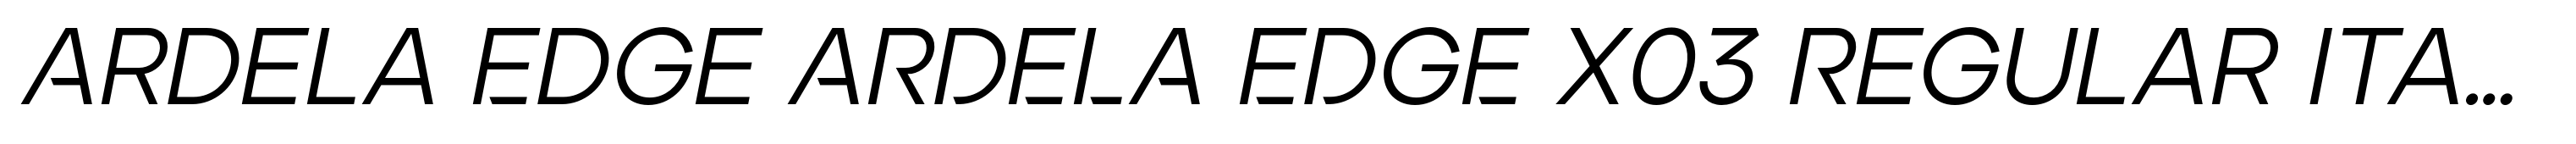 Ardela Edge ARDELA EDGE X03 Regular Italic